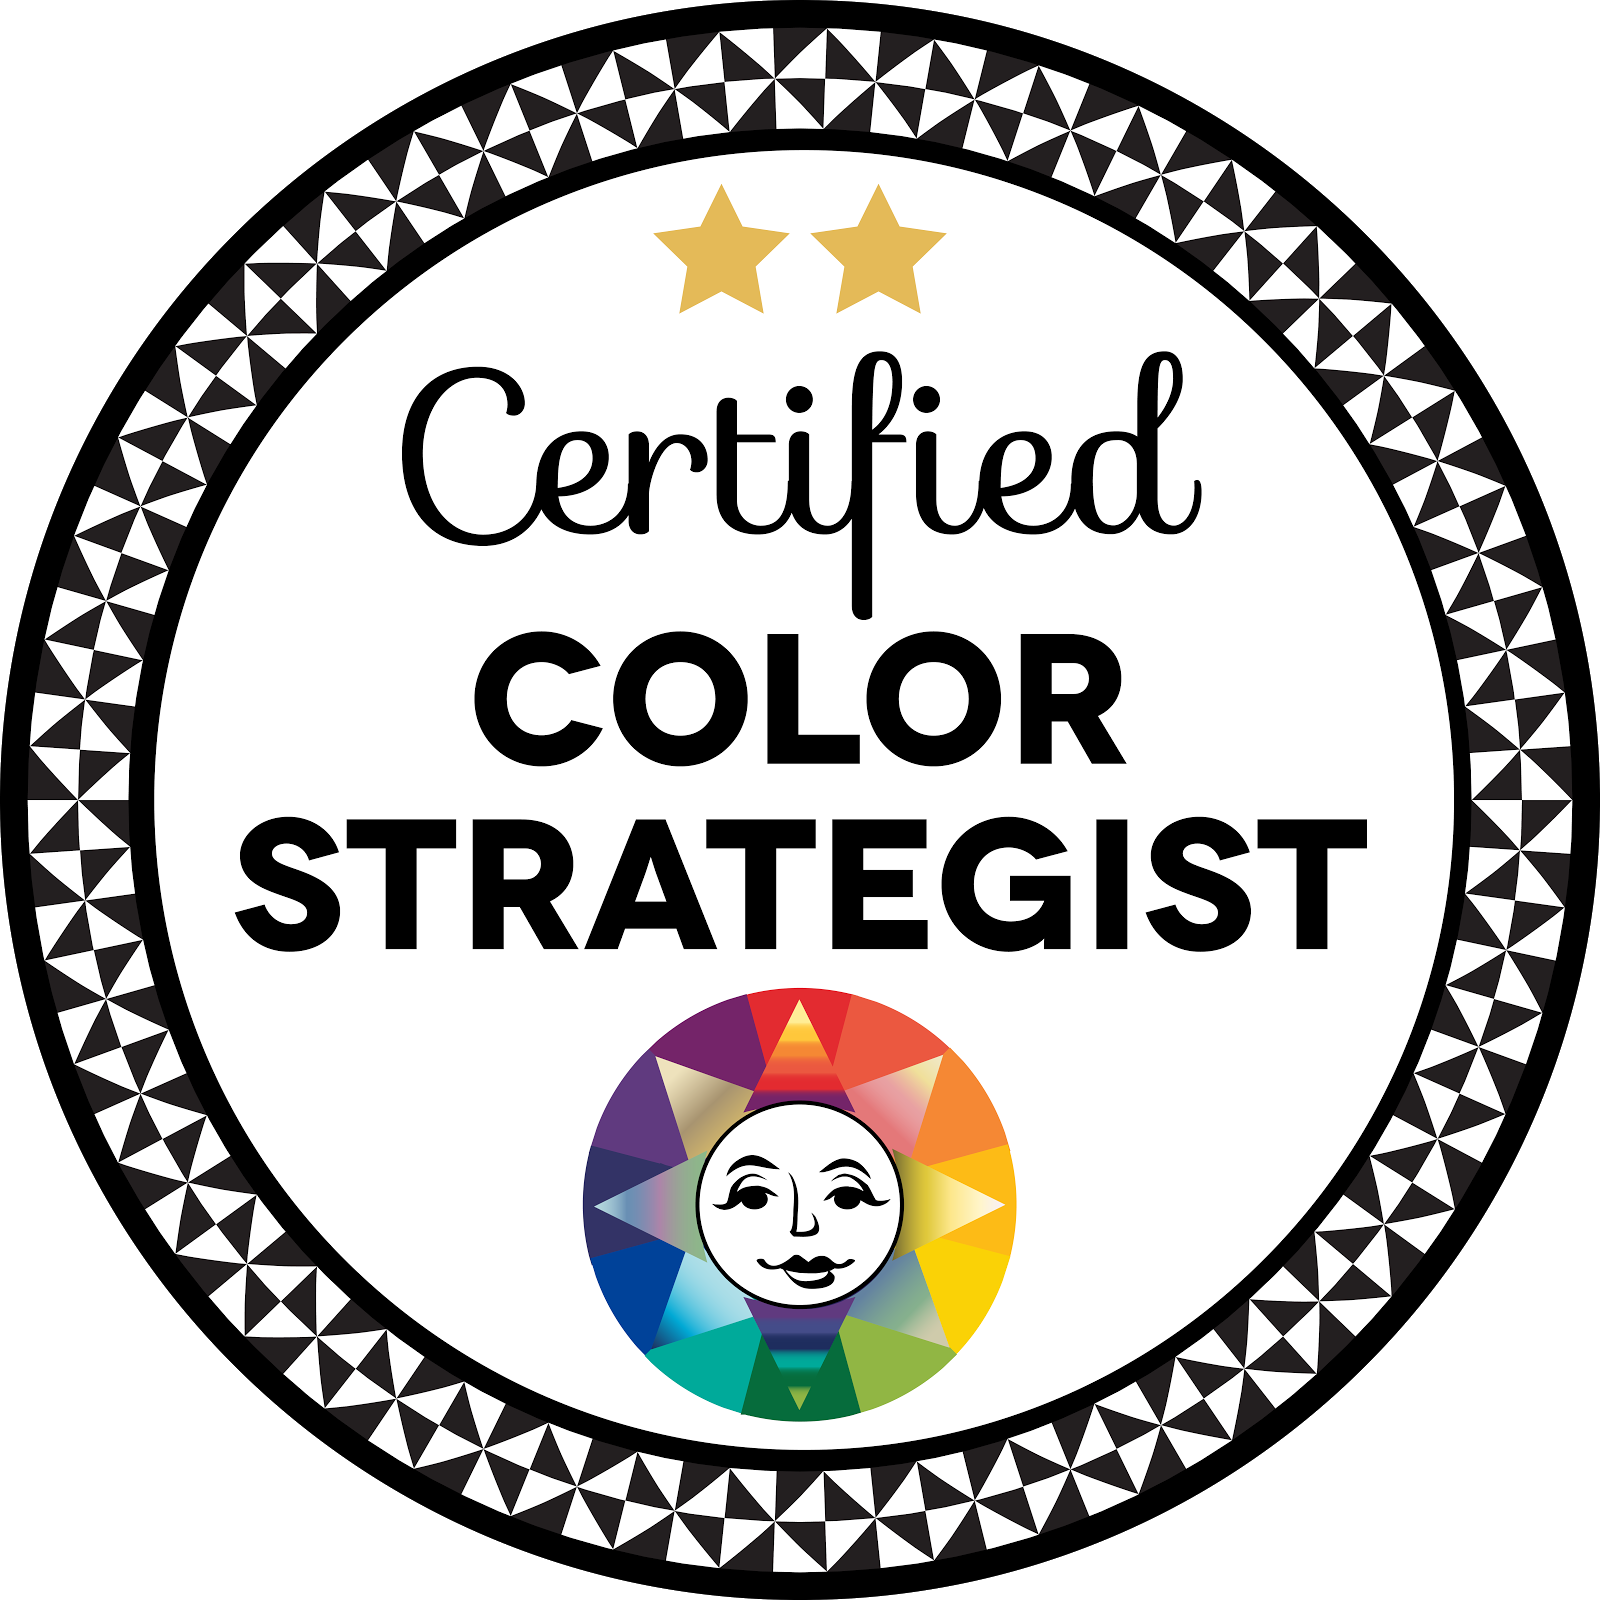 Color Strategist